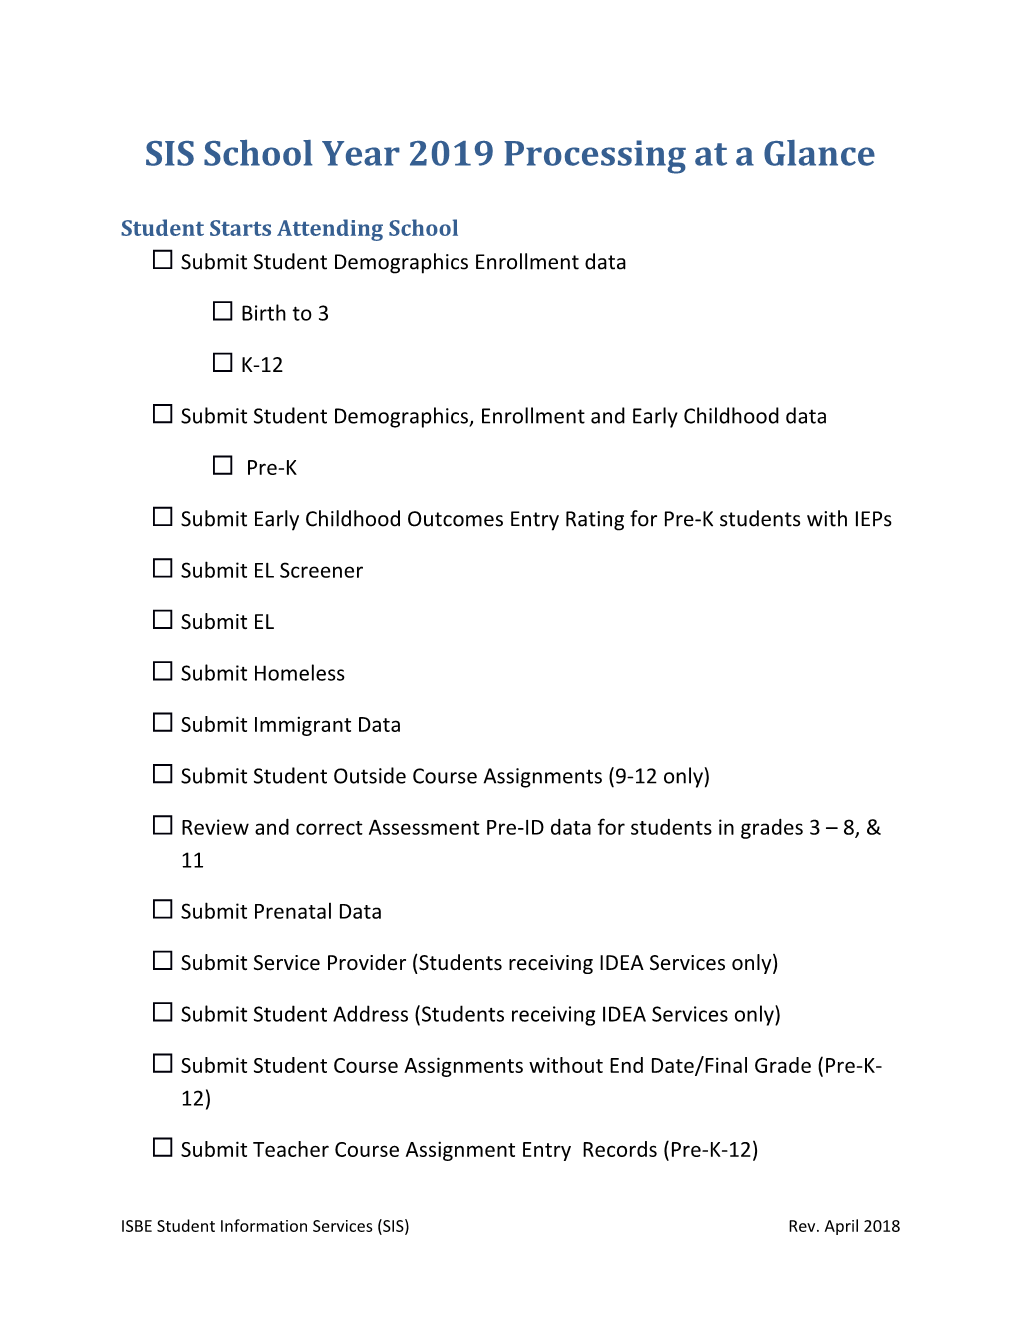 2019 SIS School Year Processing at a Glance (Checklist) 20180802 EH